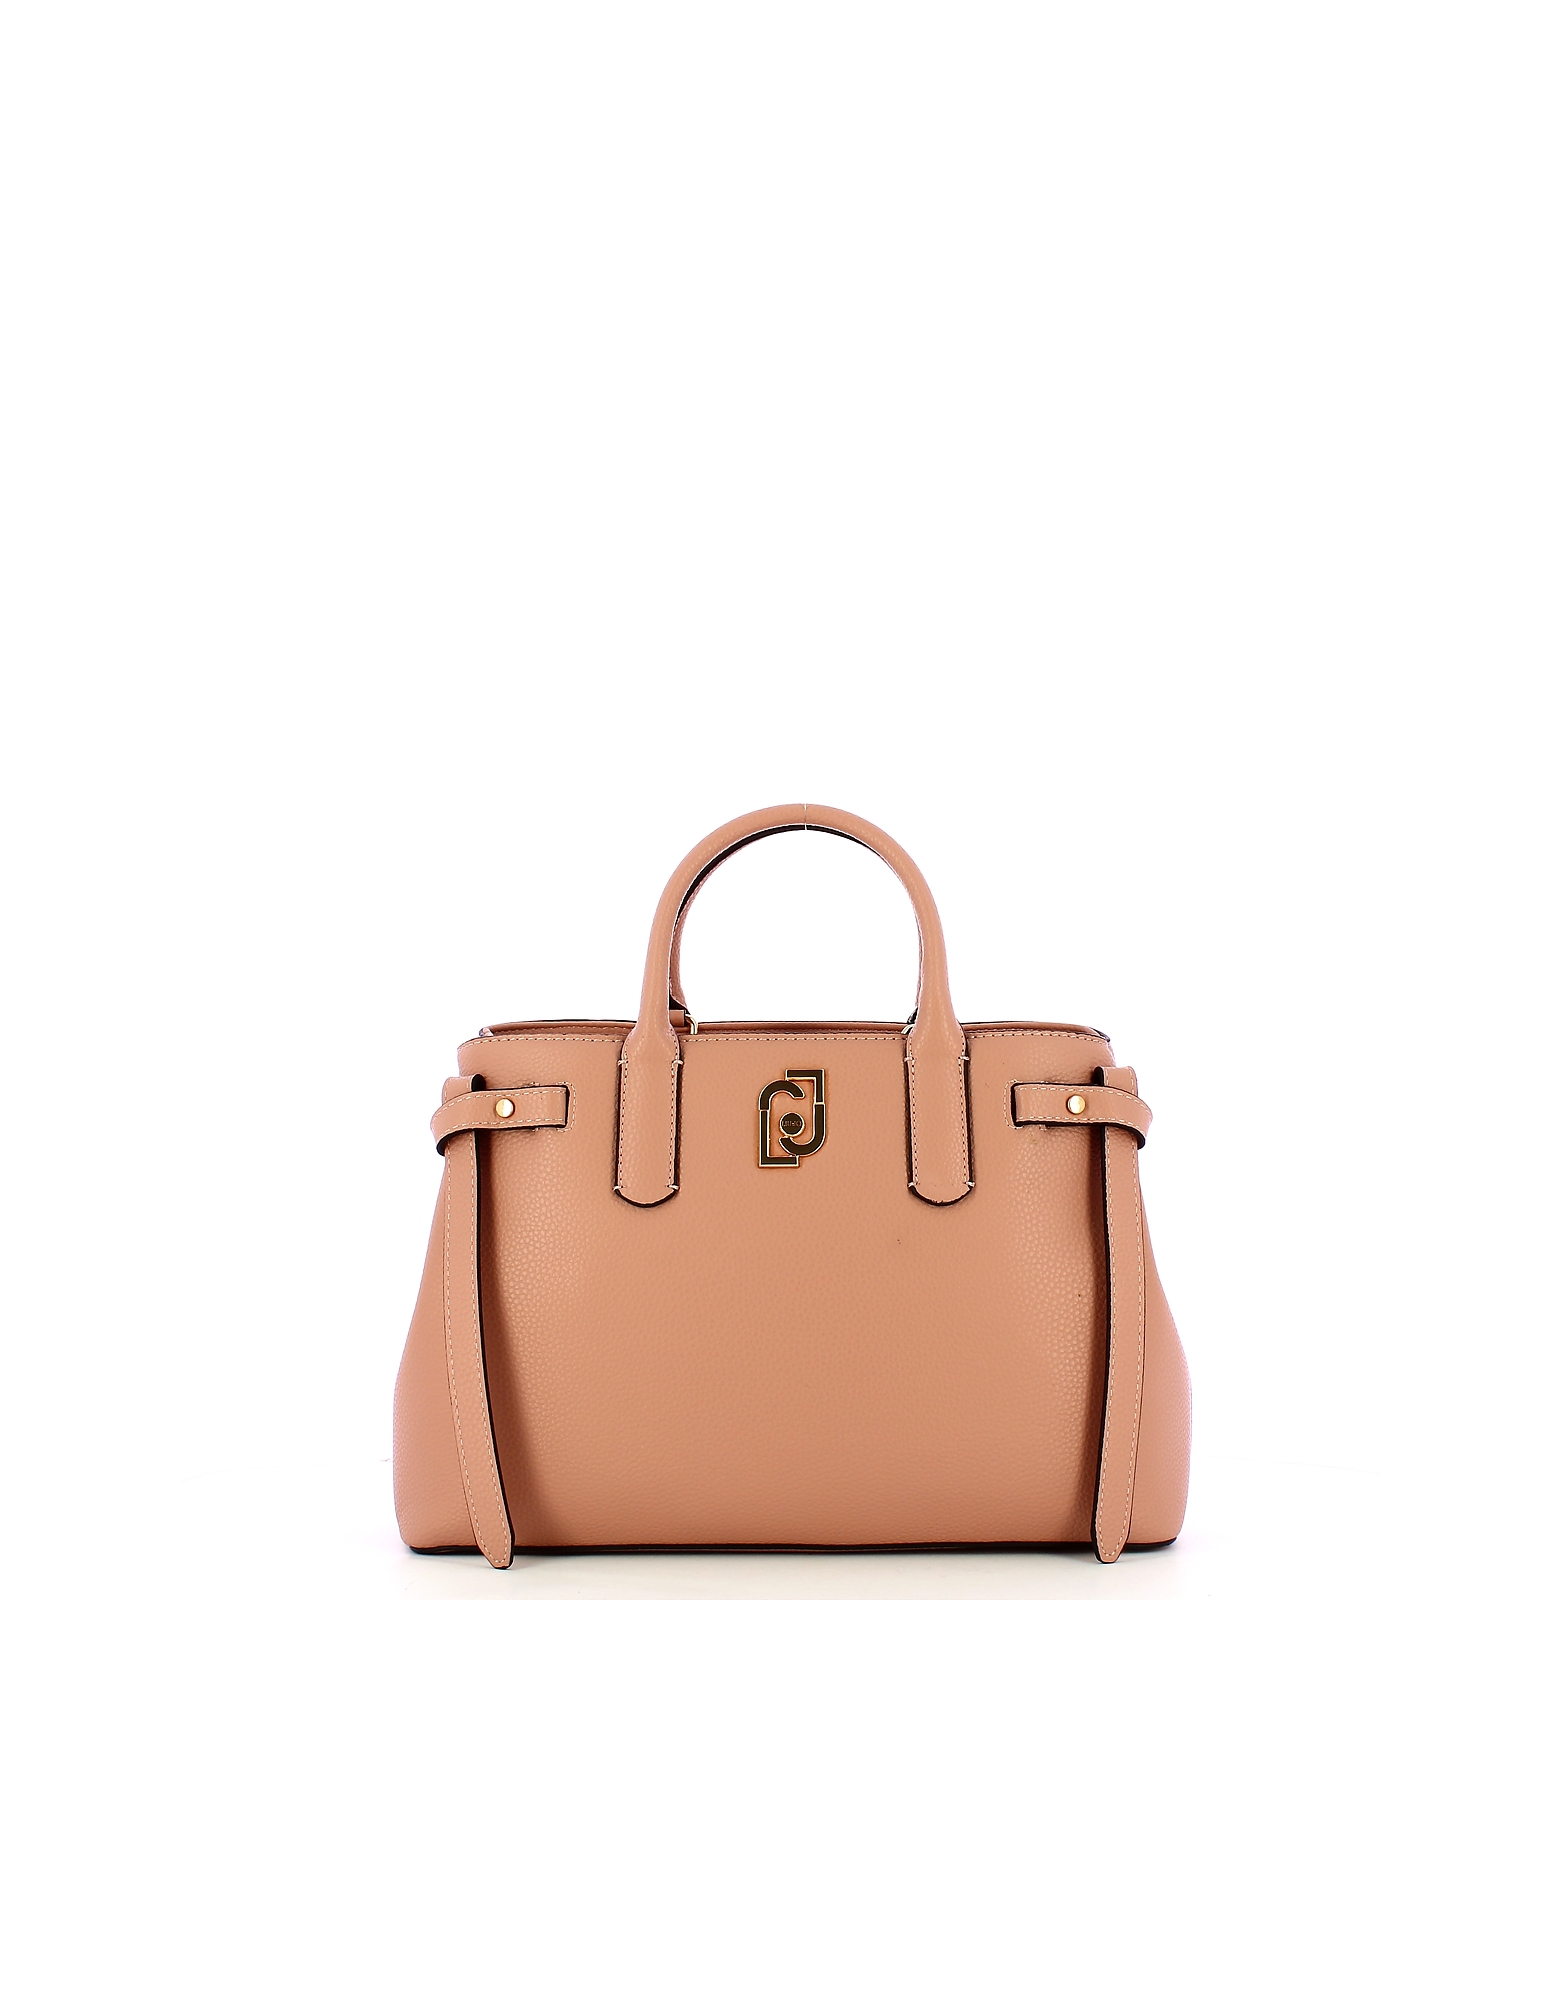 Liu •jo Designer Handbags Women's Bag In Neutral